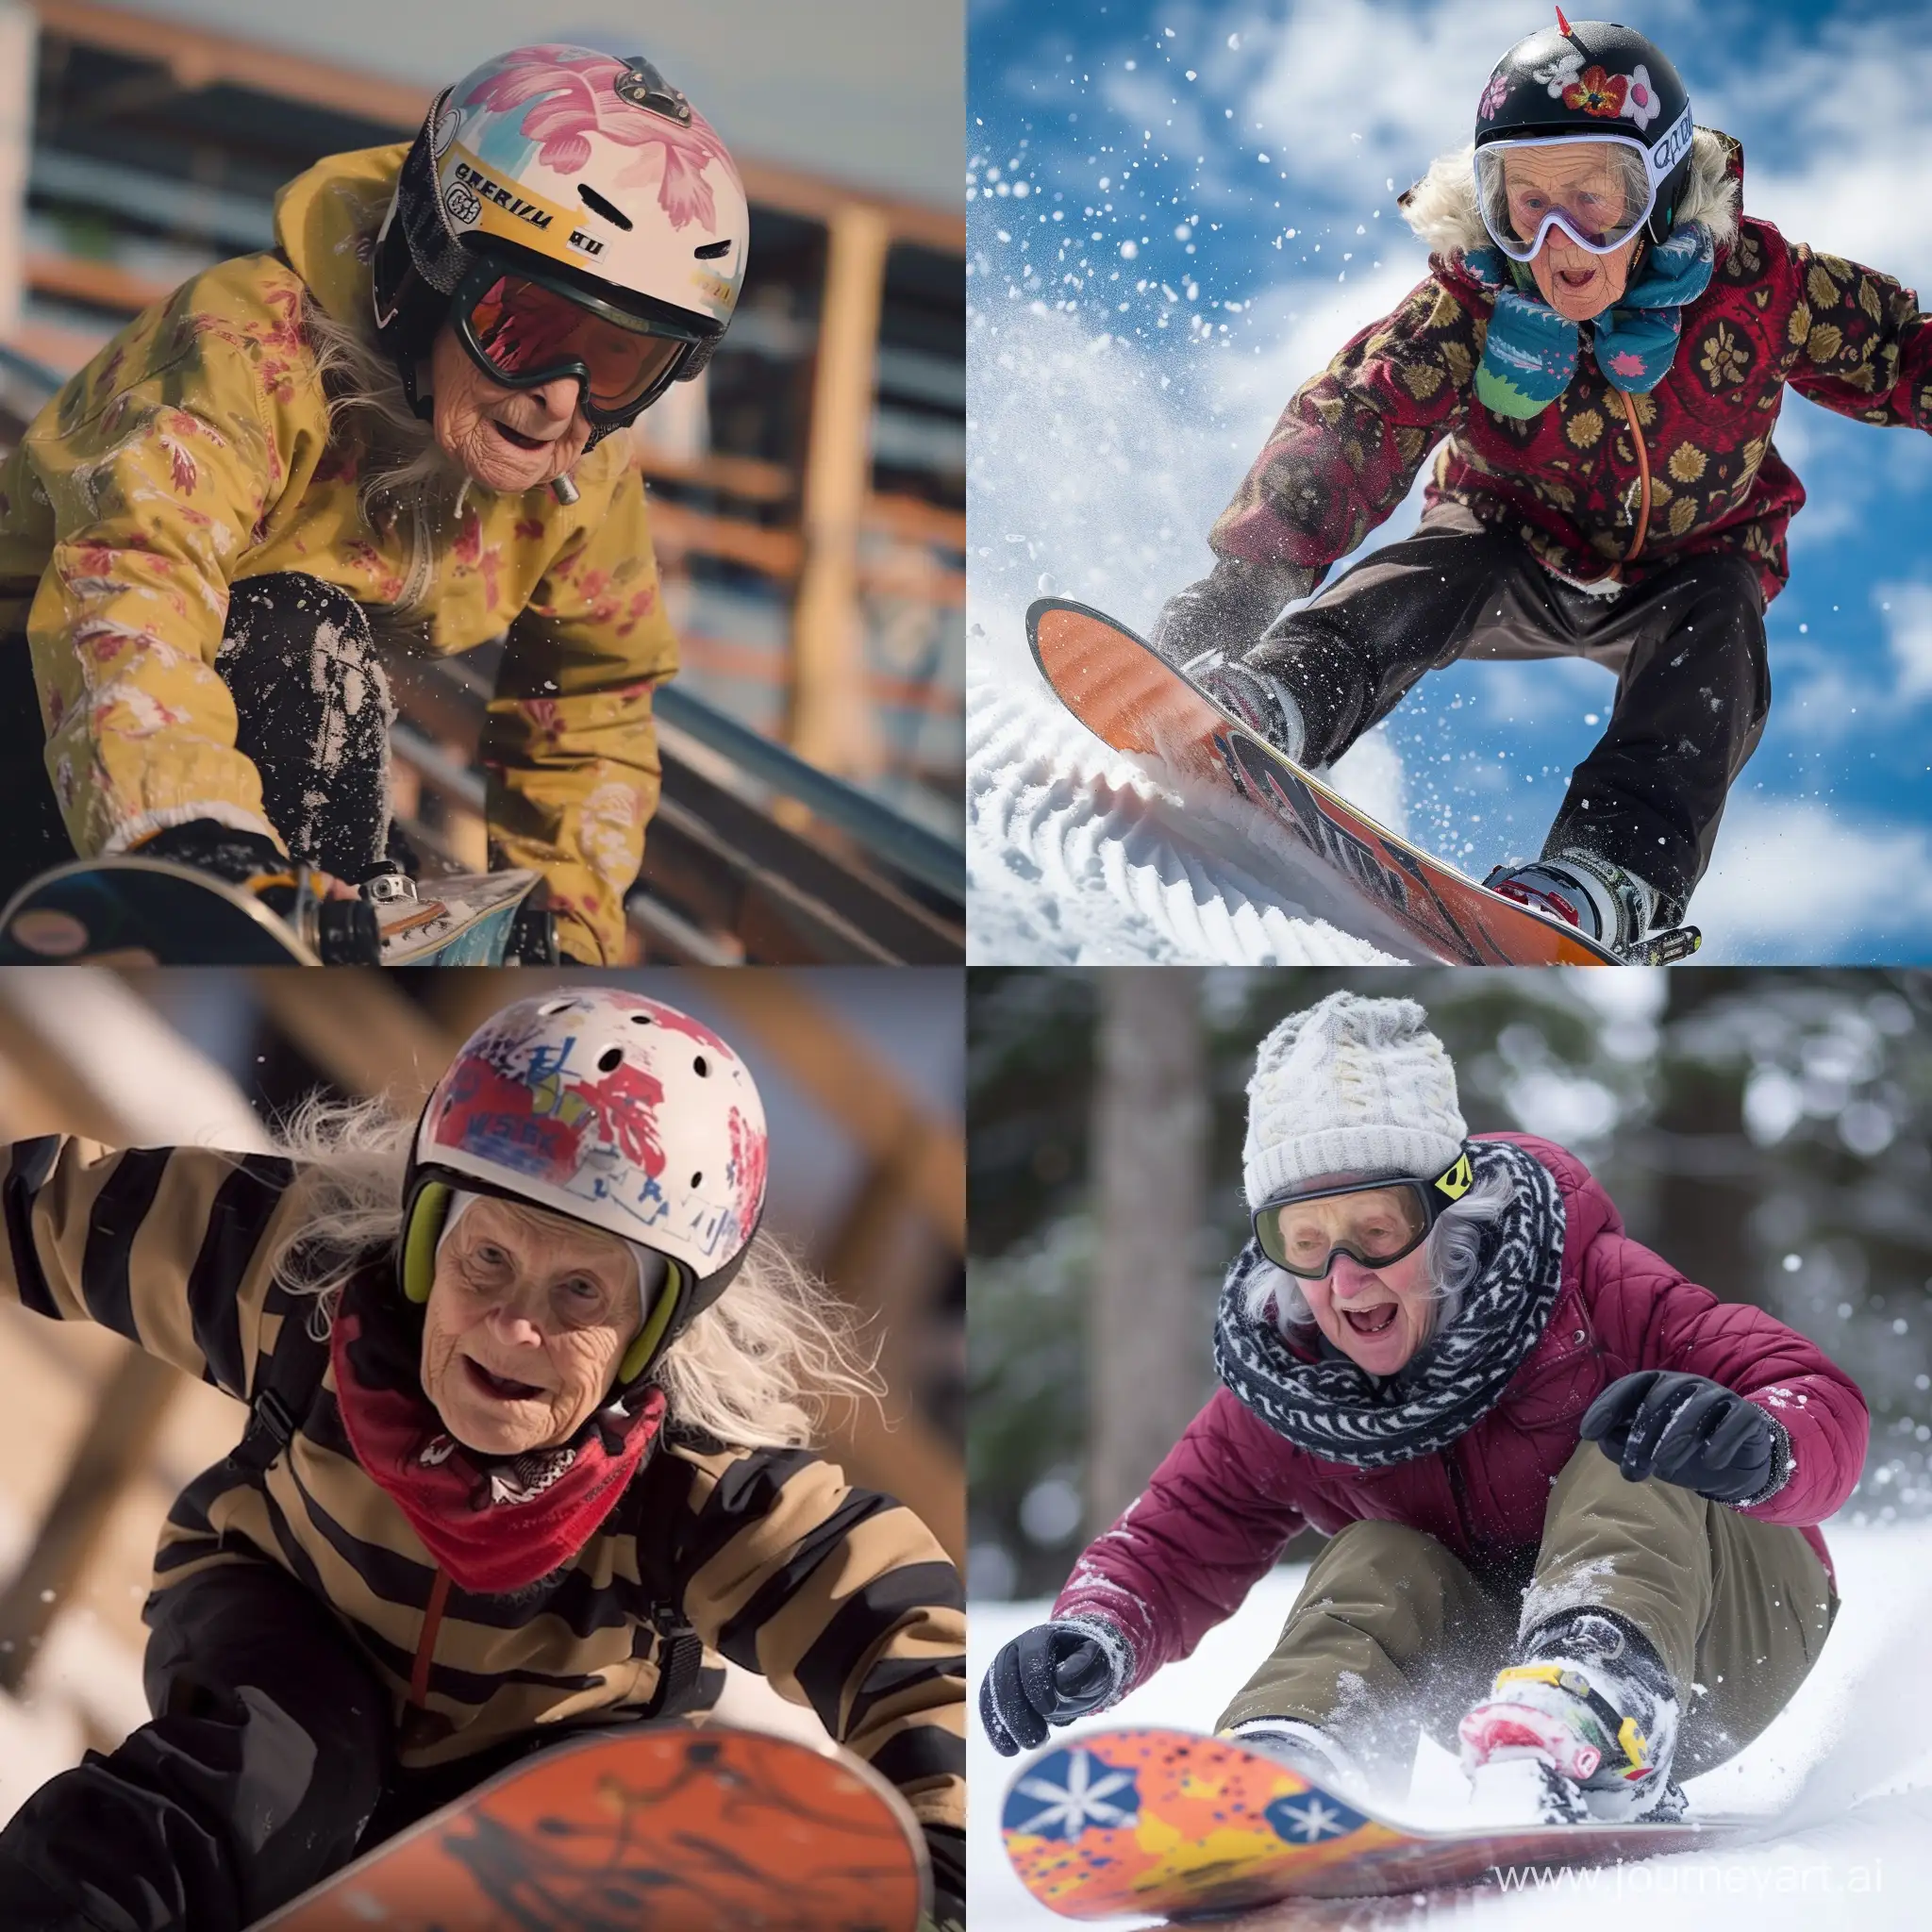 Elderly-Womans-Epic-Snowboarding-Battle